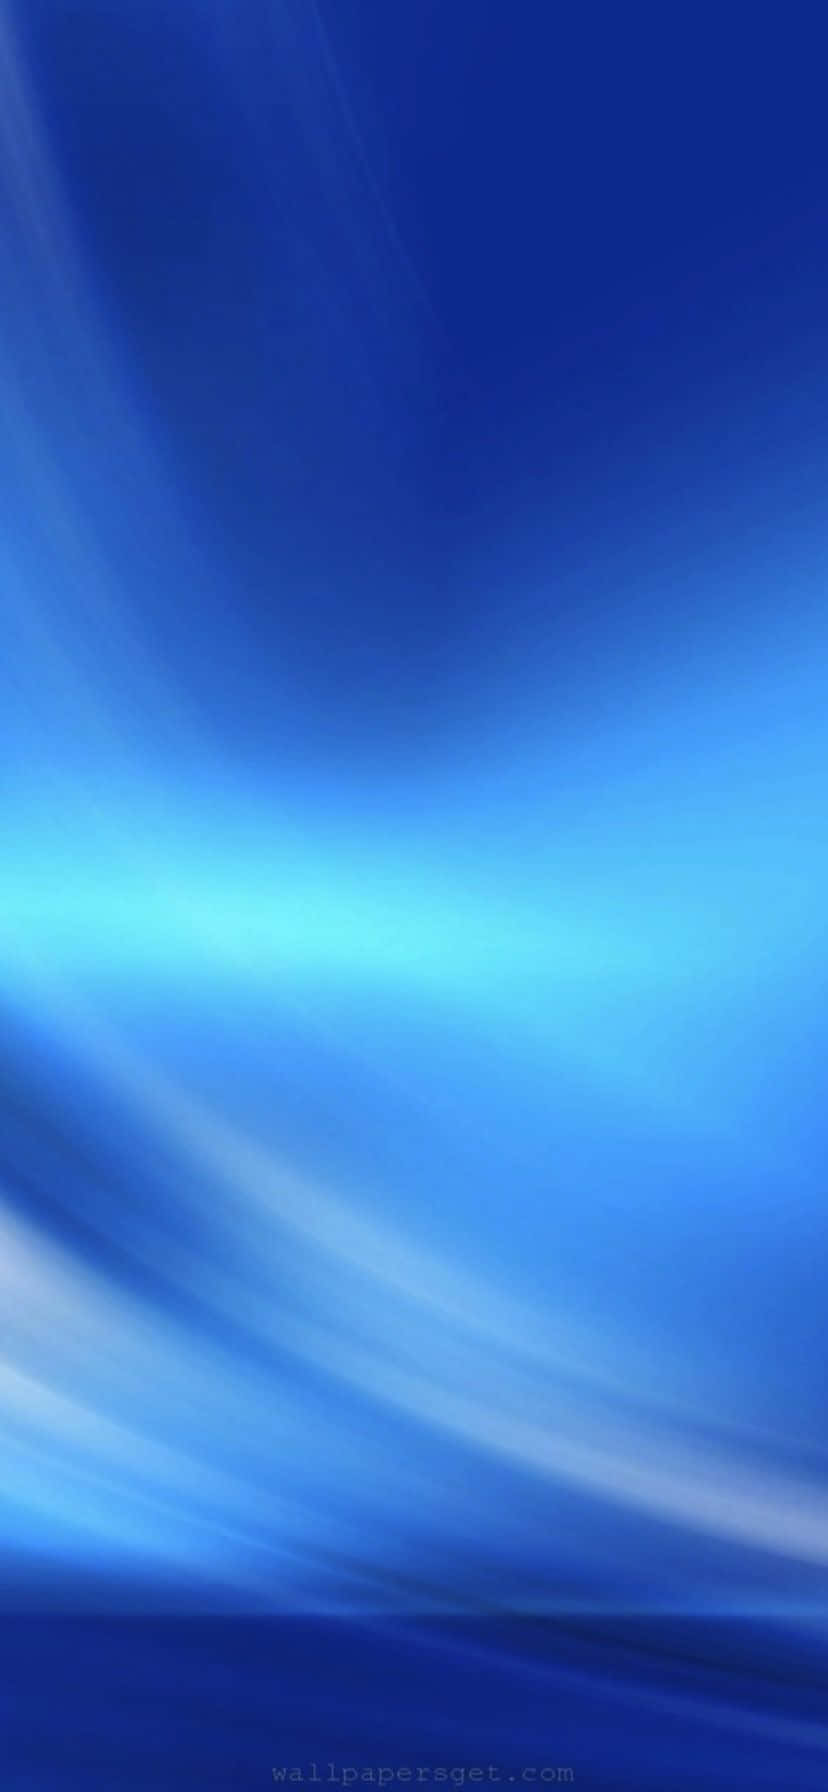 Nyttblått Iphone Xr. Wallpaper